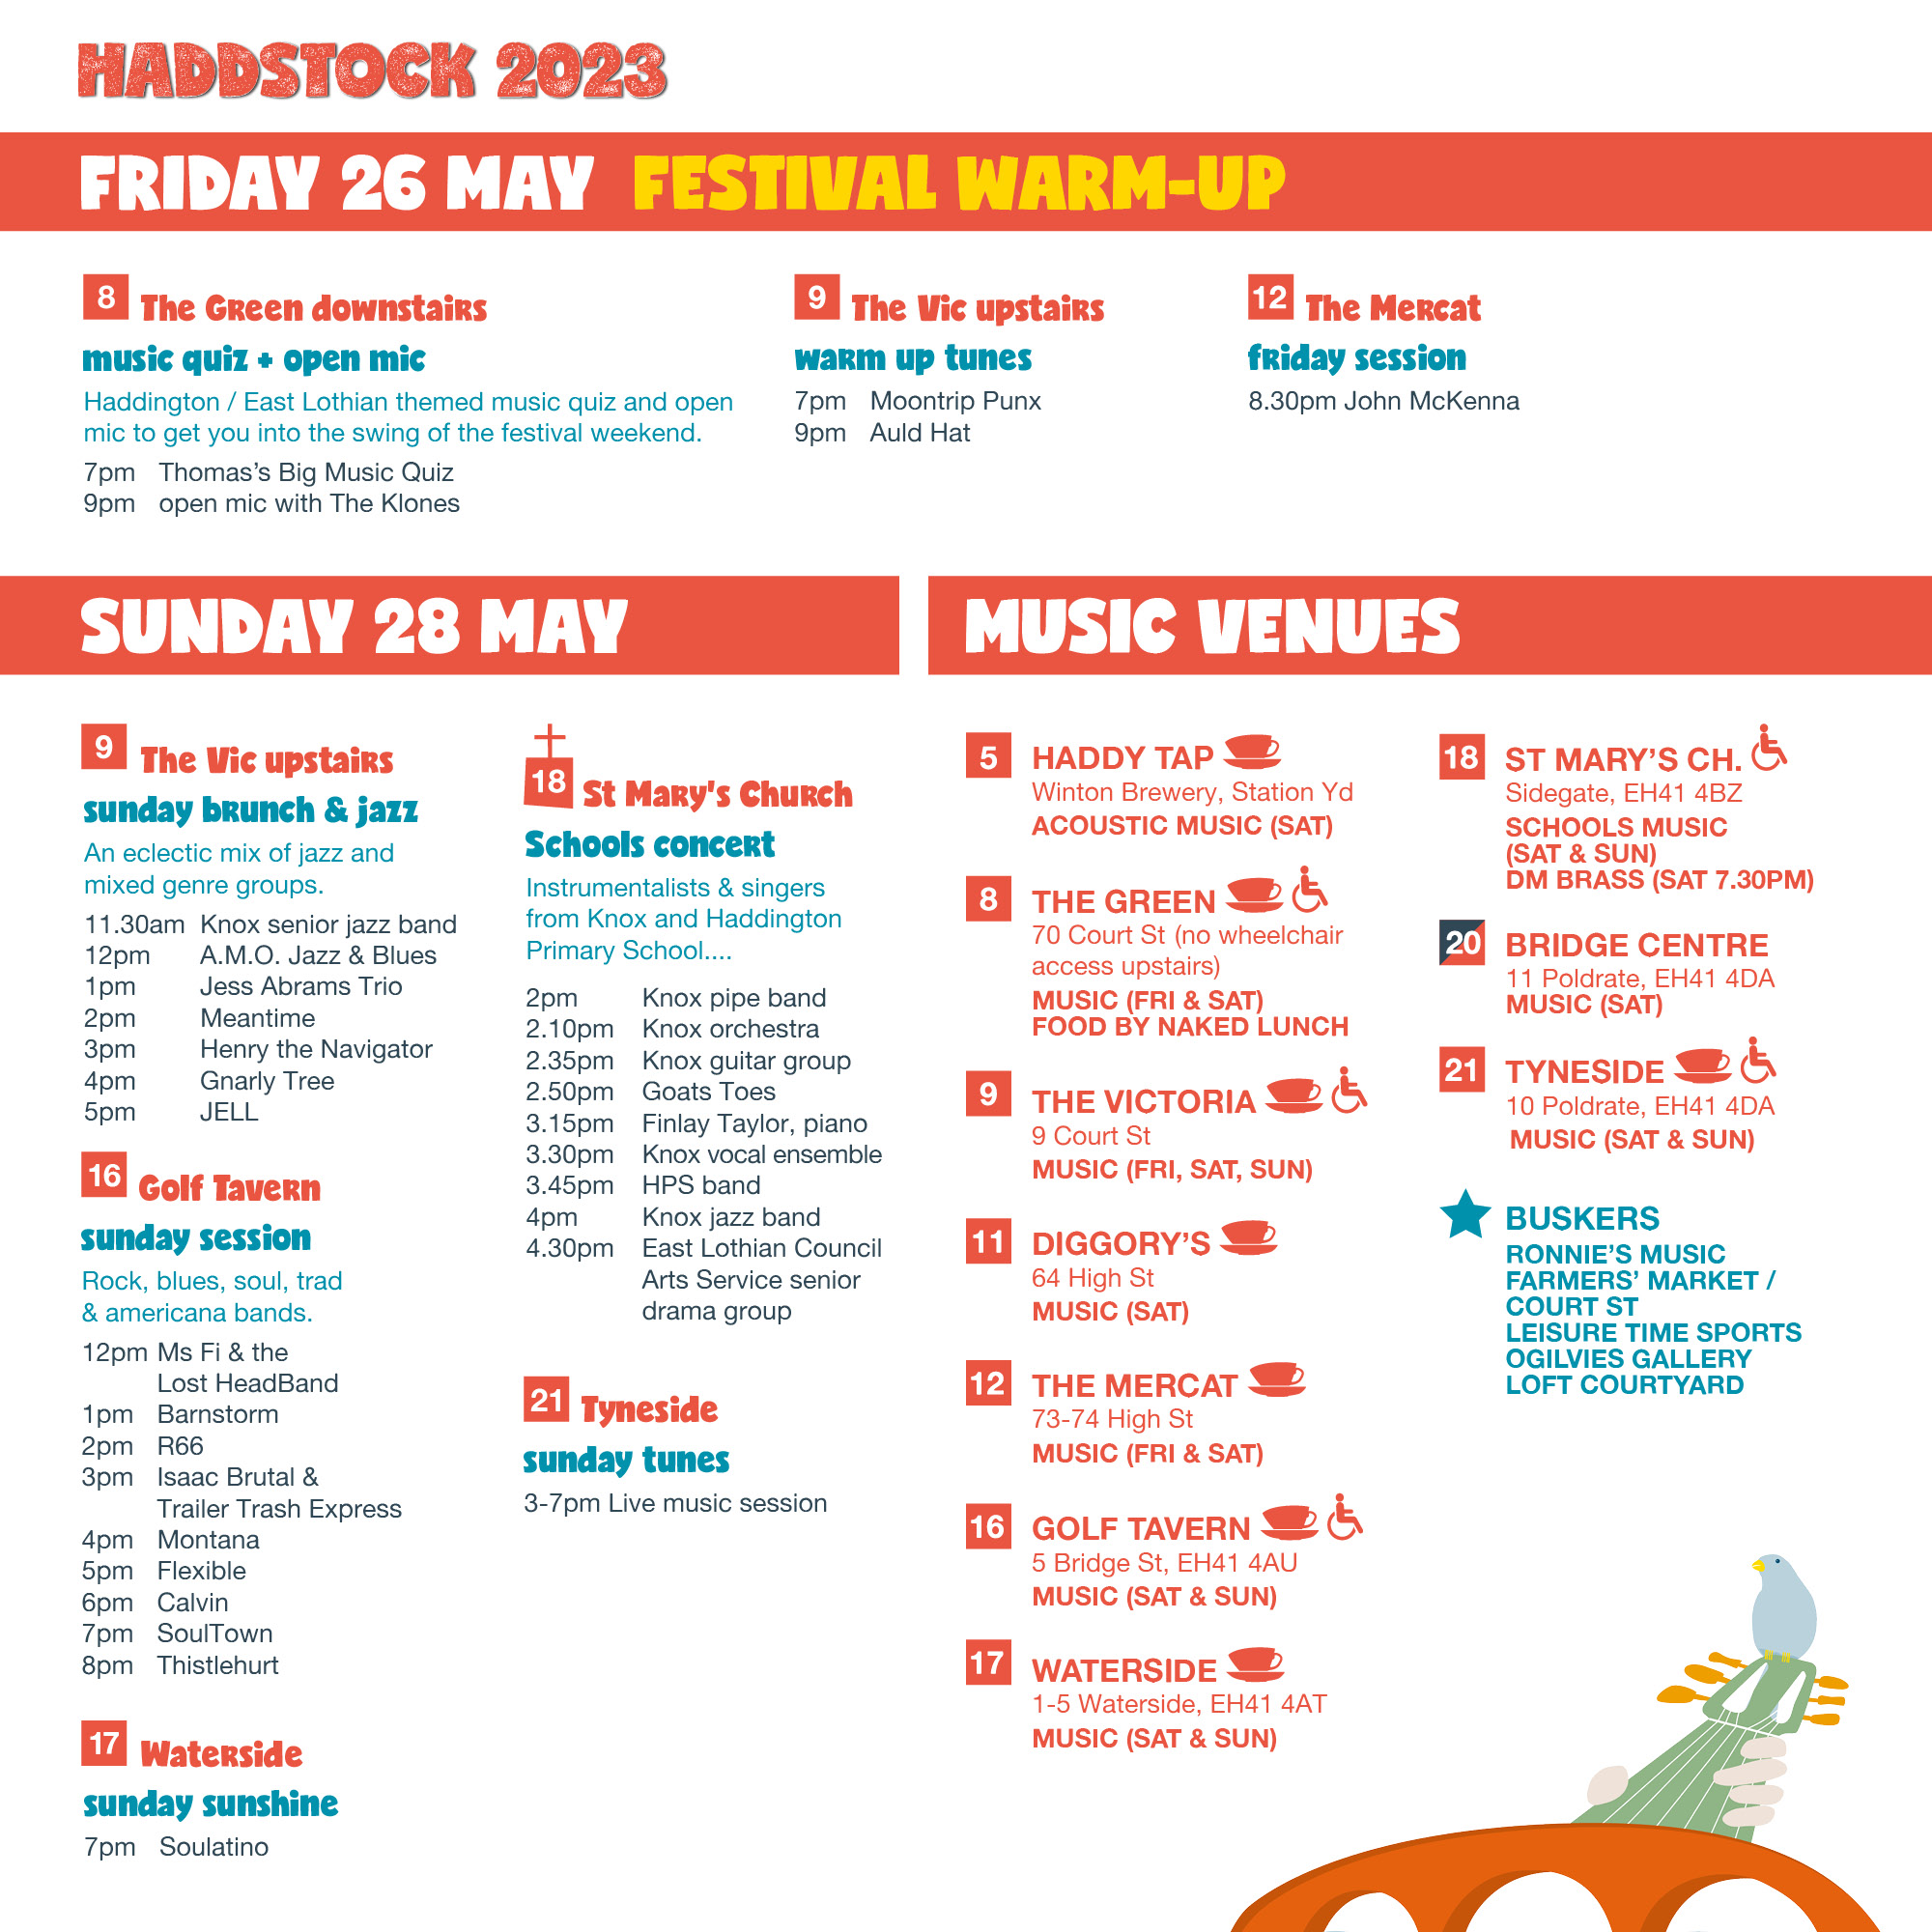 haddstock 2023 - 27-28 may - music